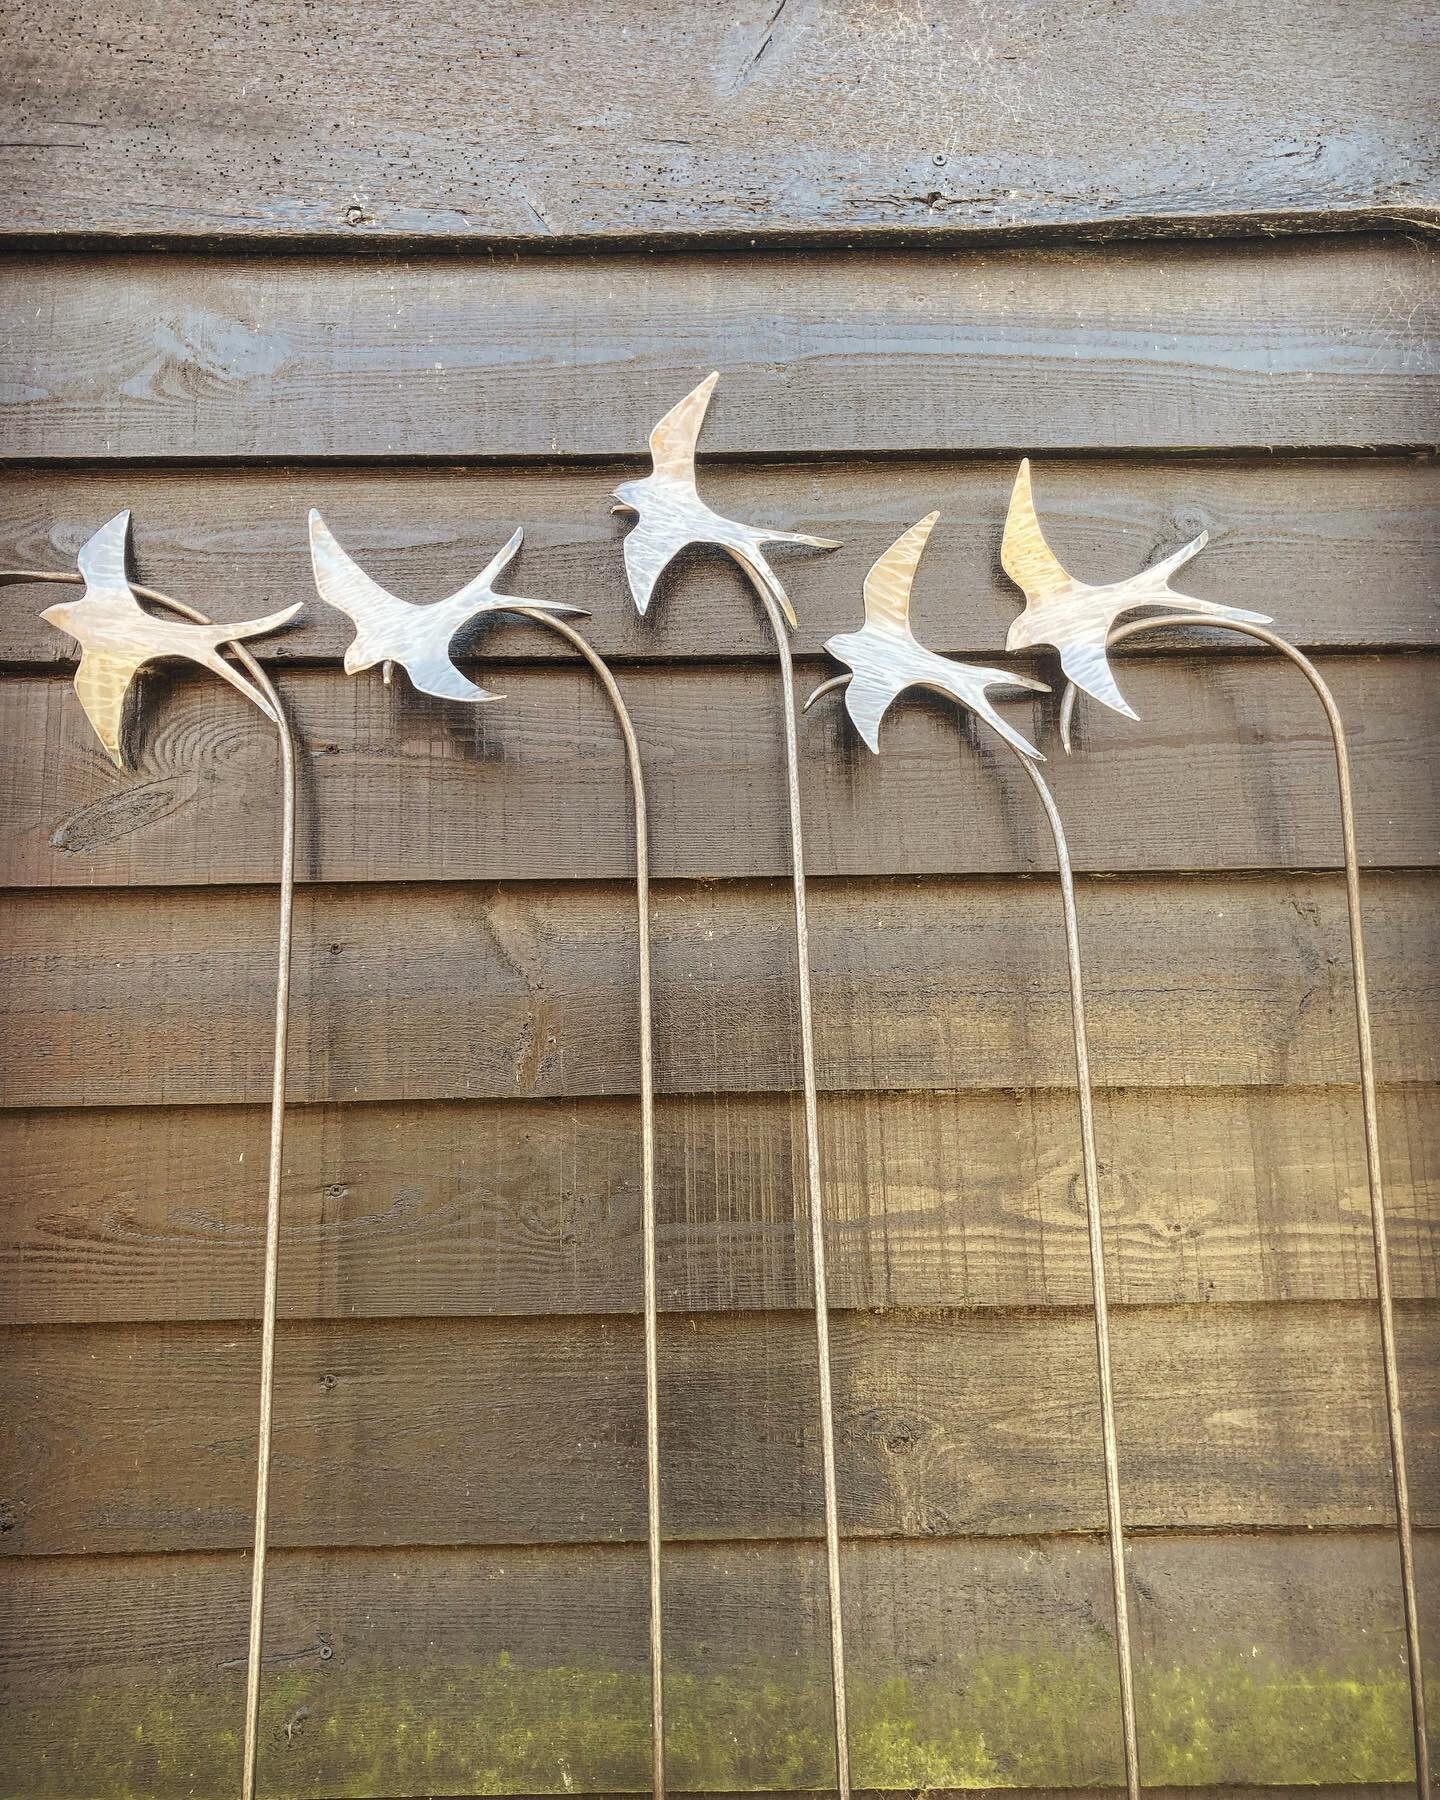 Flying swallows!
#swallow #swift #birdsculpture #gardensculpture #birdsofinstagram #metalwork #blacksmith #metalwork #gardendesignsideas #gardeninspiration #spring #sculpture #rtechwelding